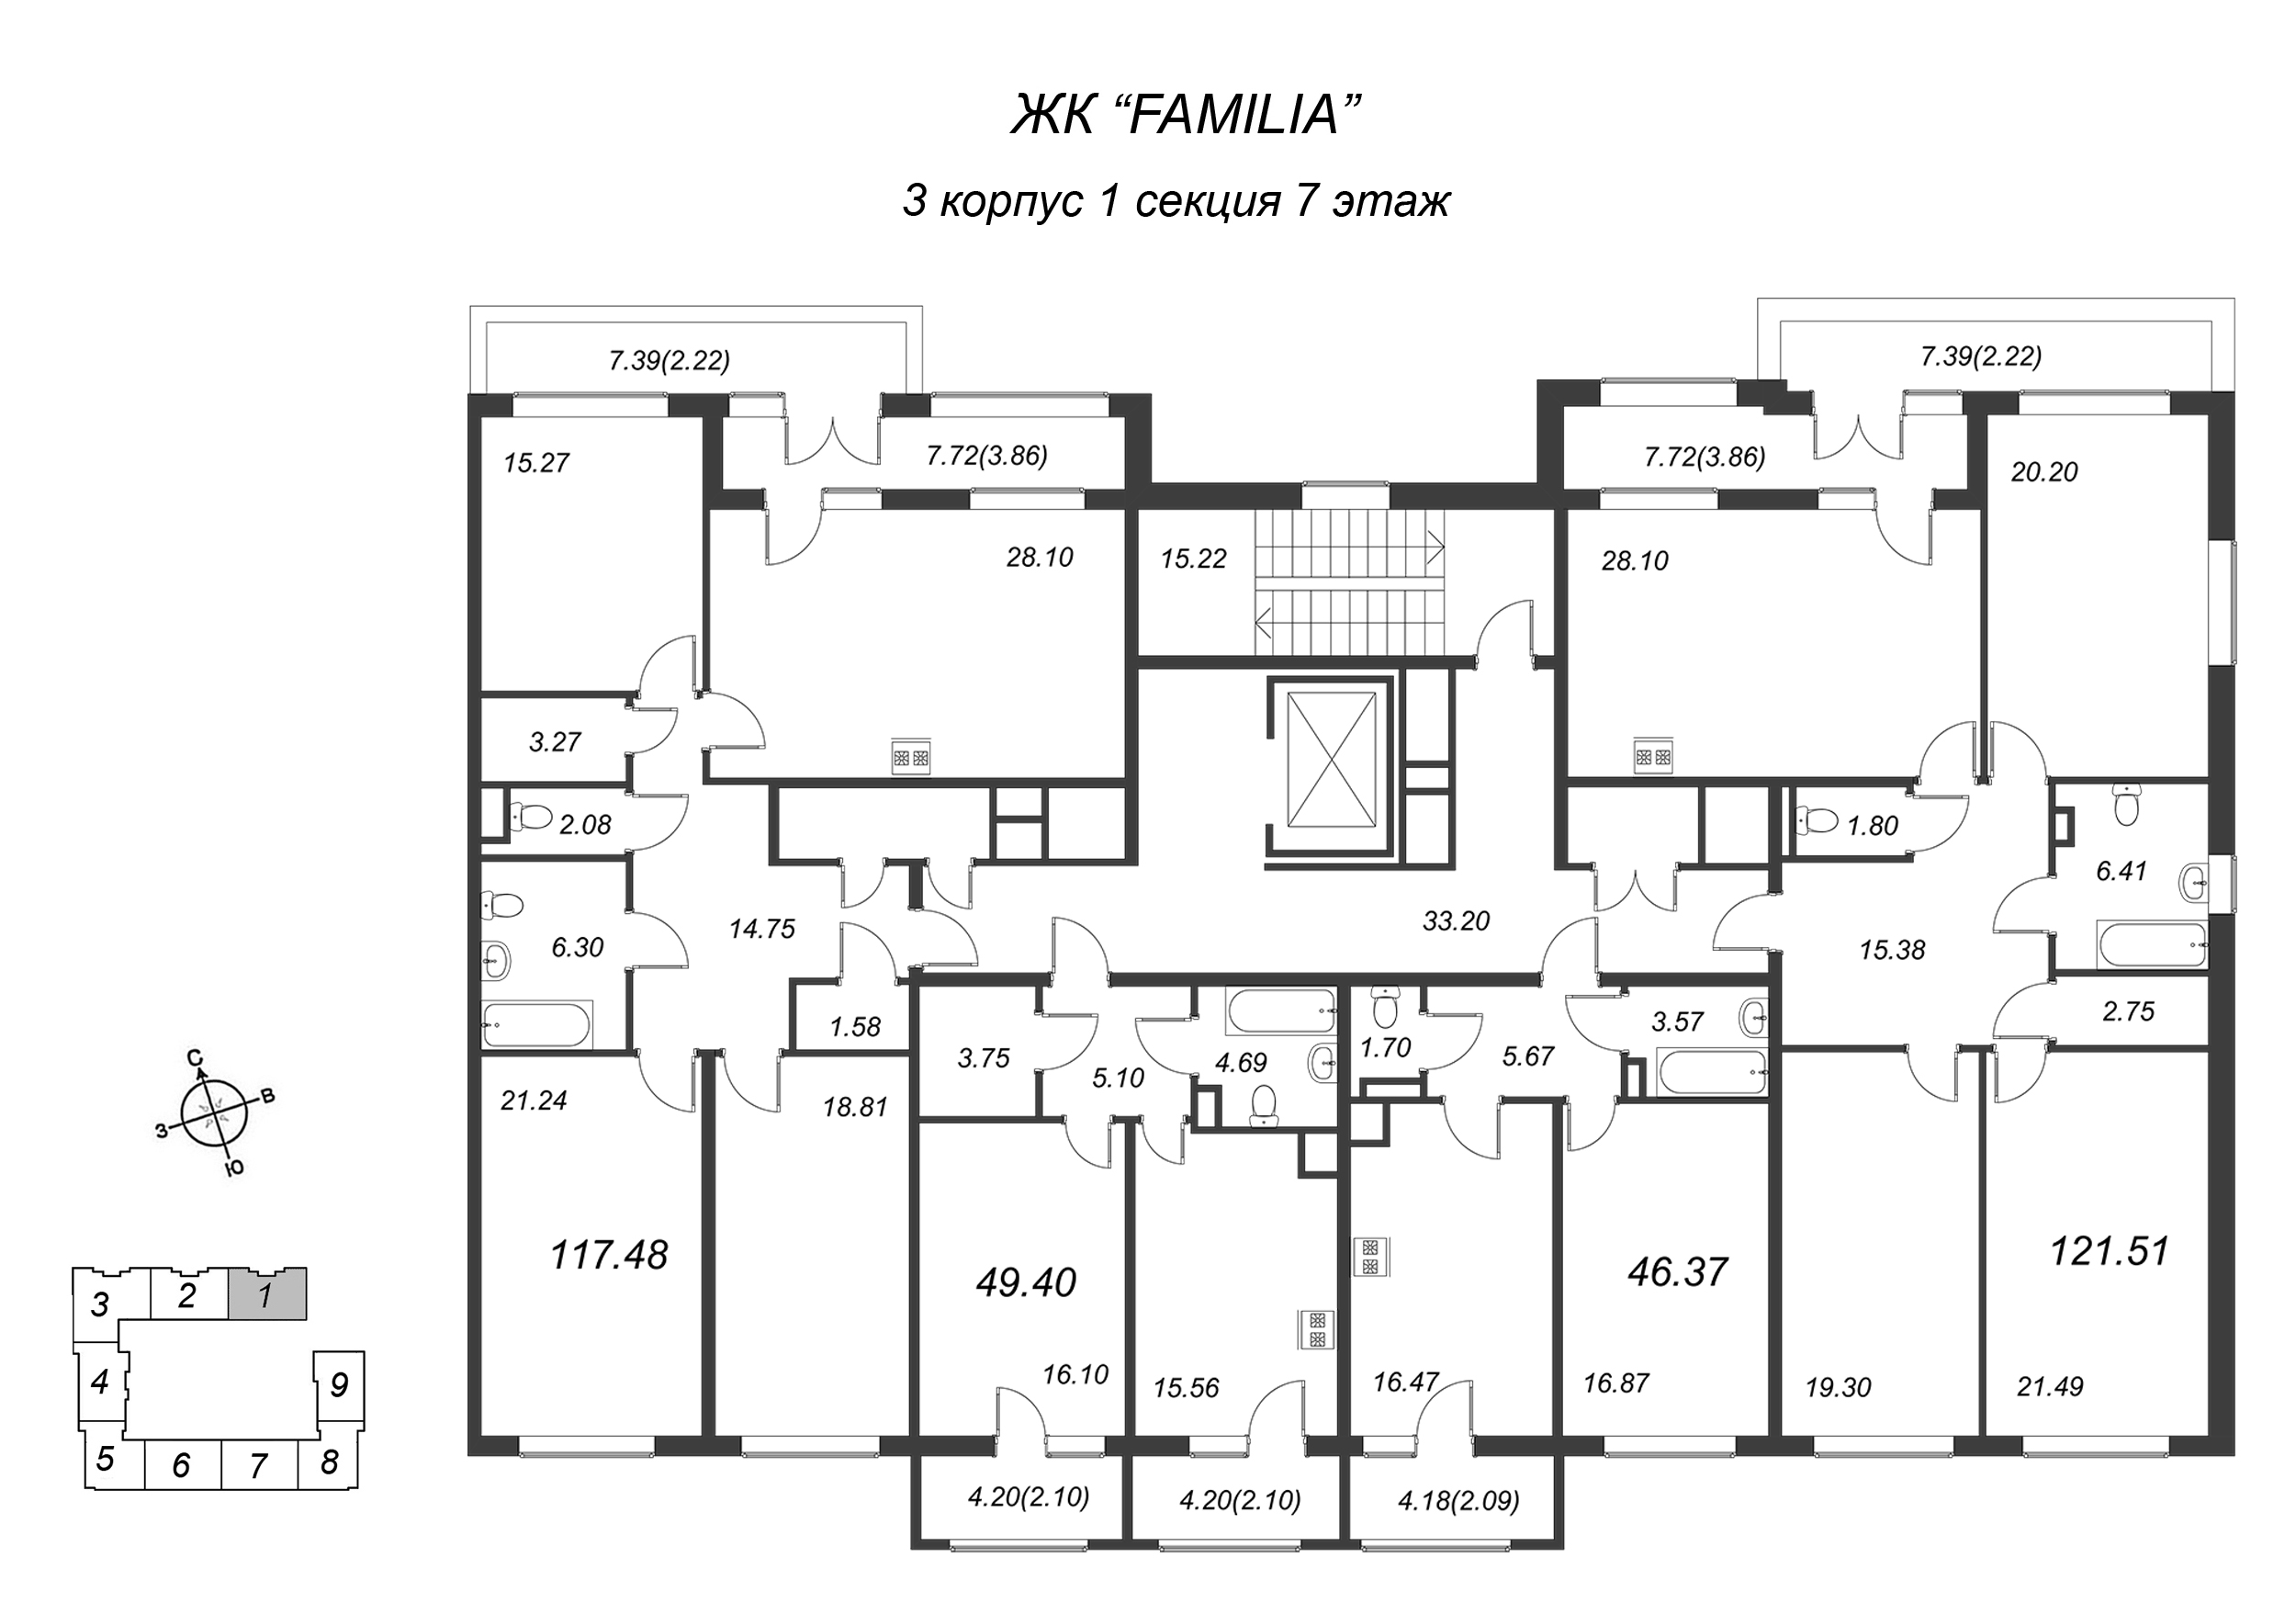 2-комнатная (Евро) квартира, 46.4 м² - планировка этажа